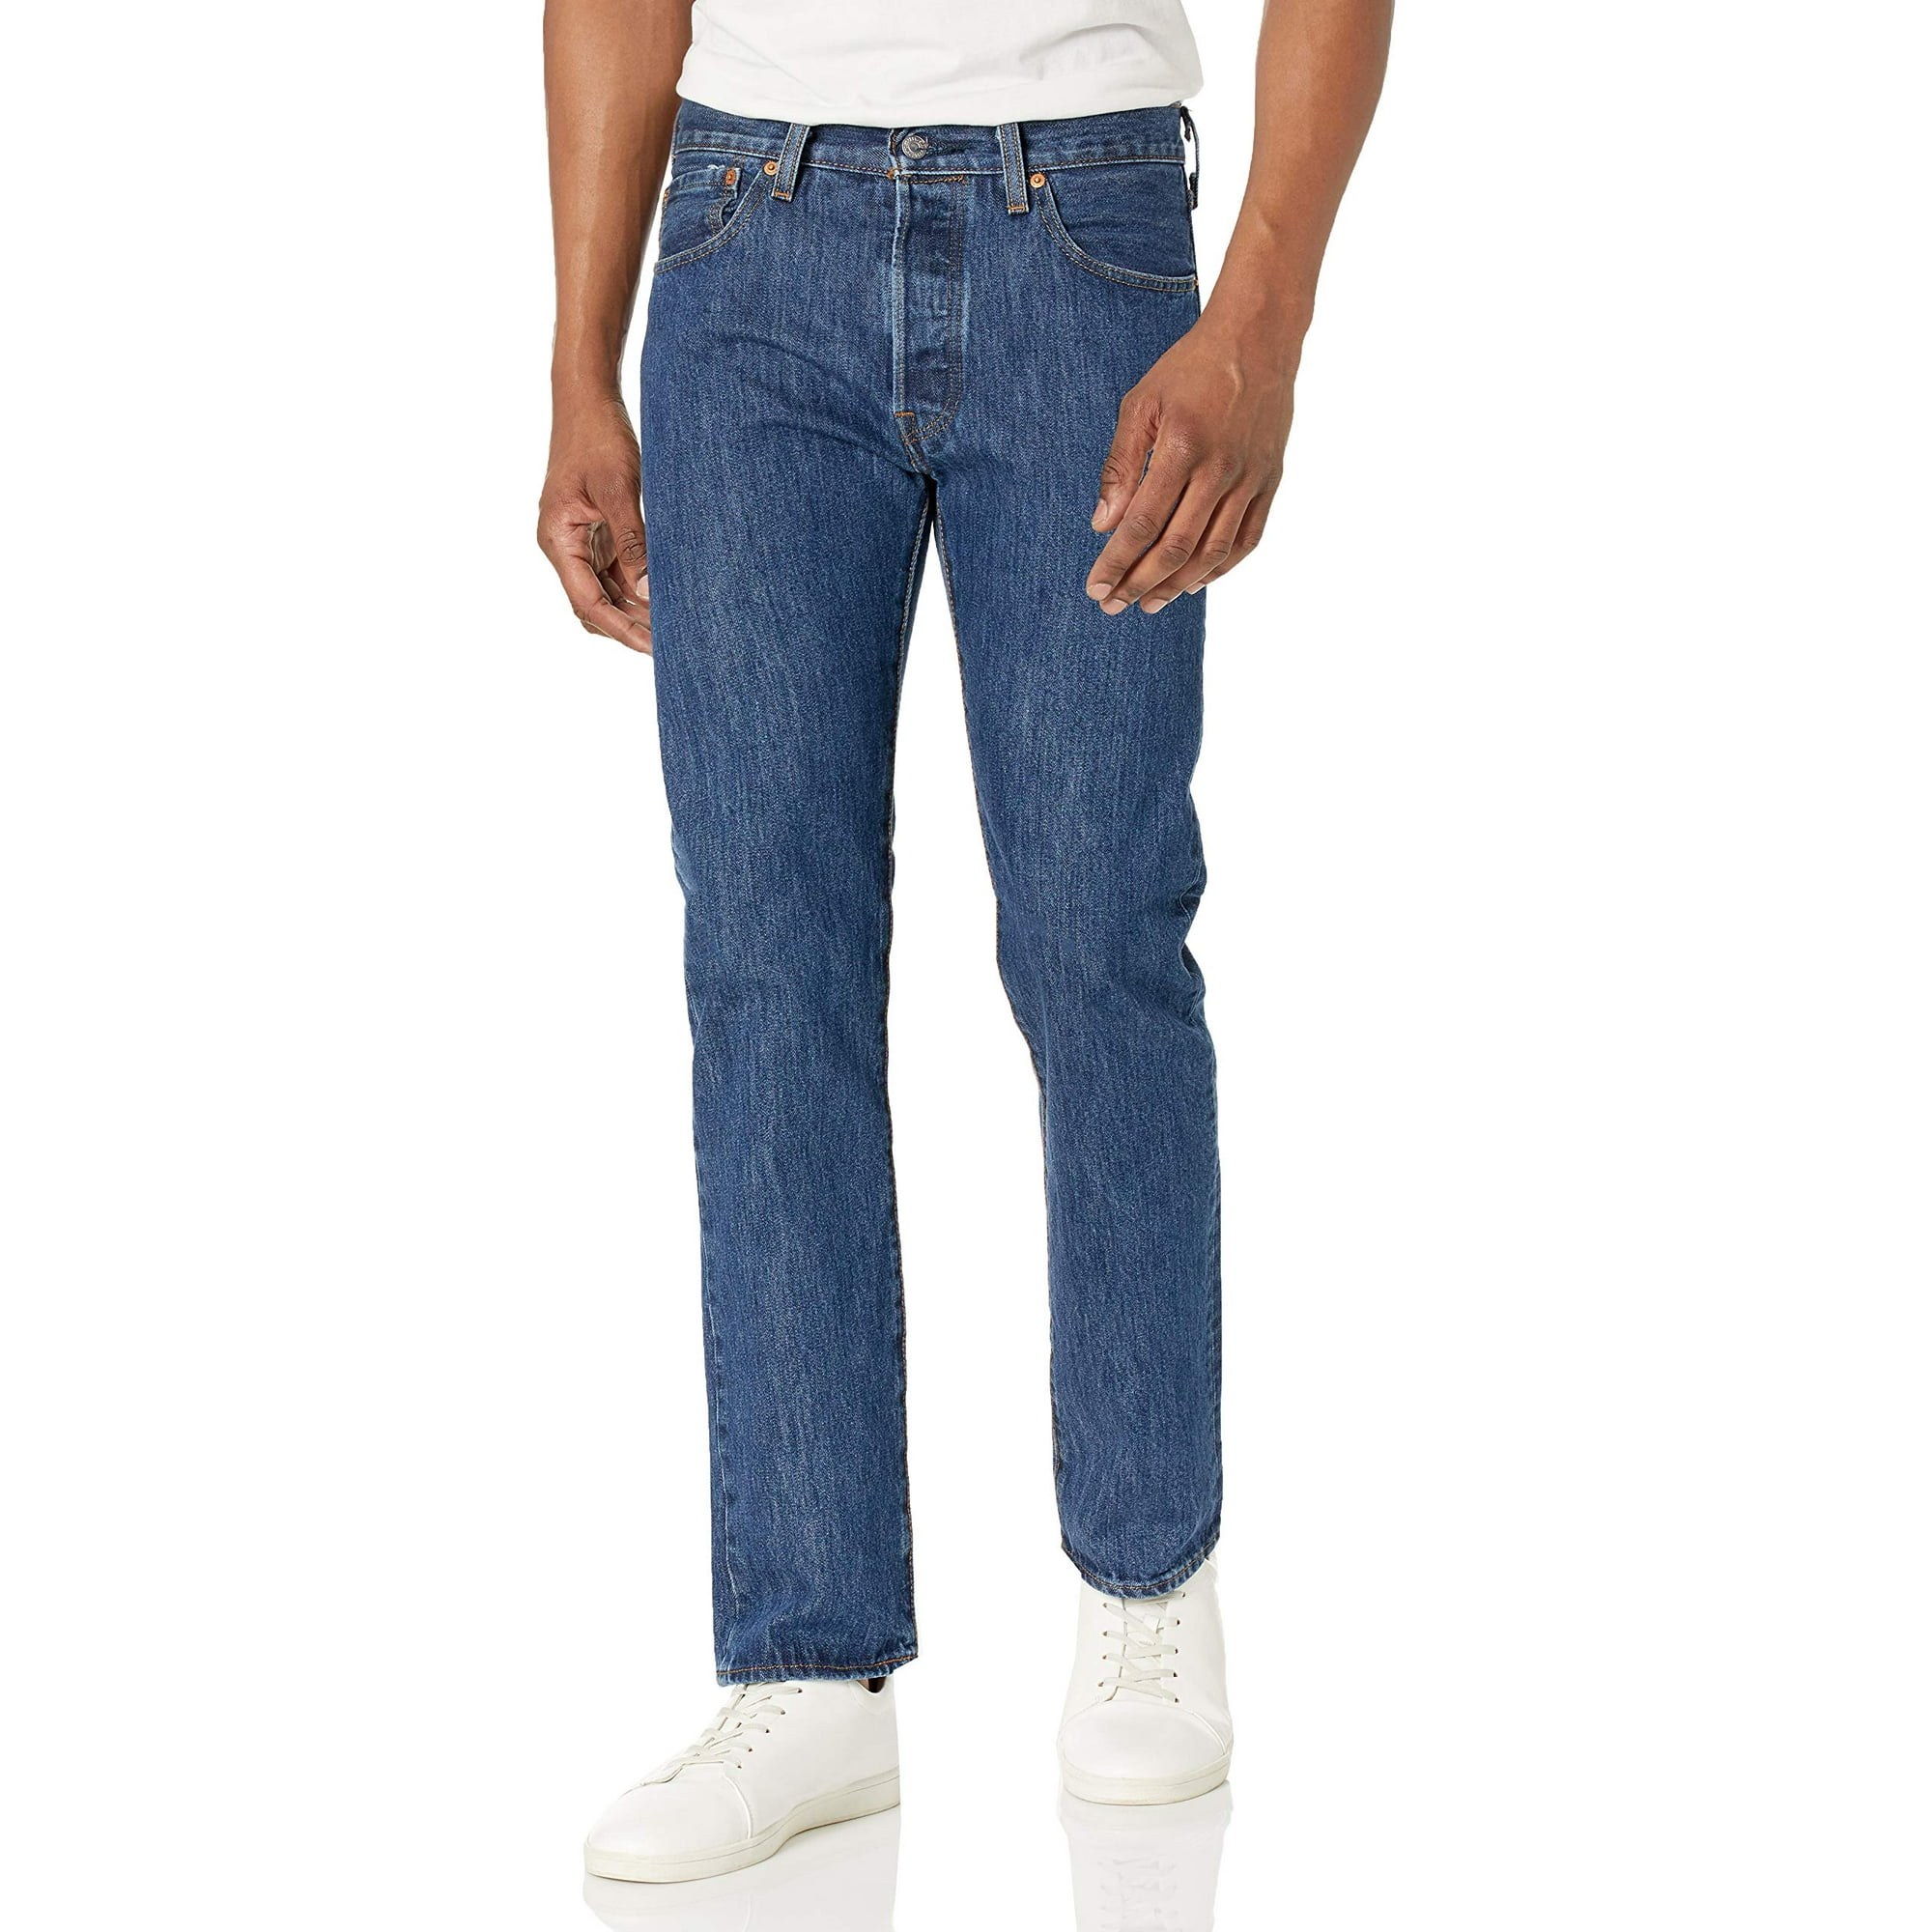 Levi's Men's 501 Original Fit Jean, Dark Stonewash, 33x36 | Walmart Canada